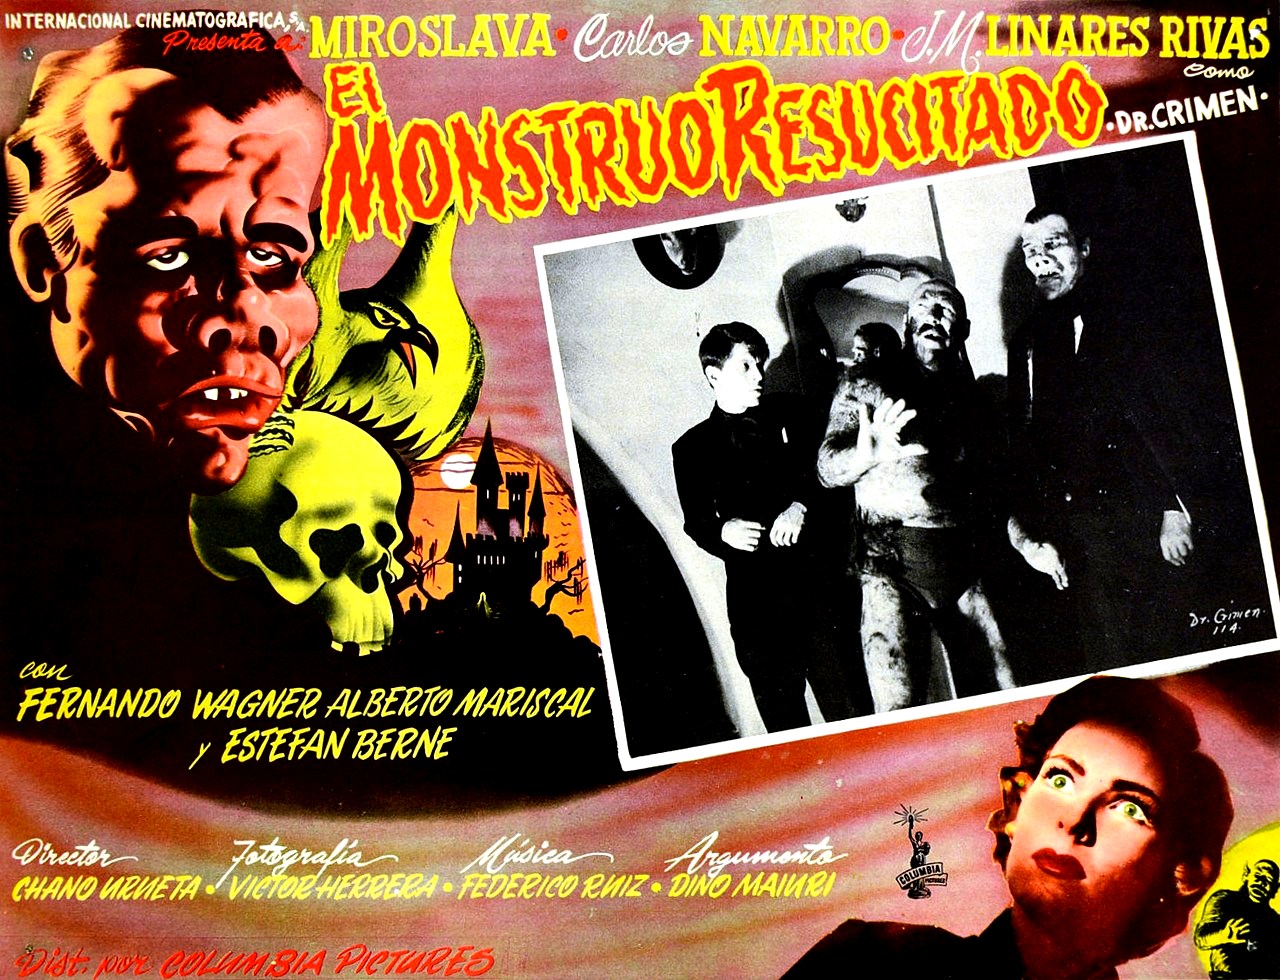 Le monstre ressuscité 1953 drive in movie channel